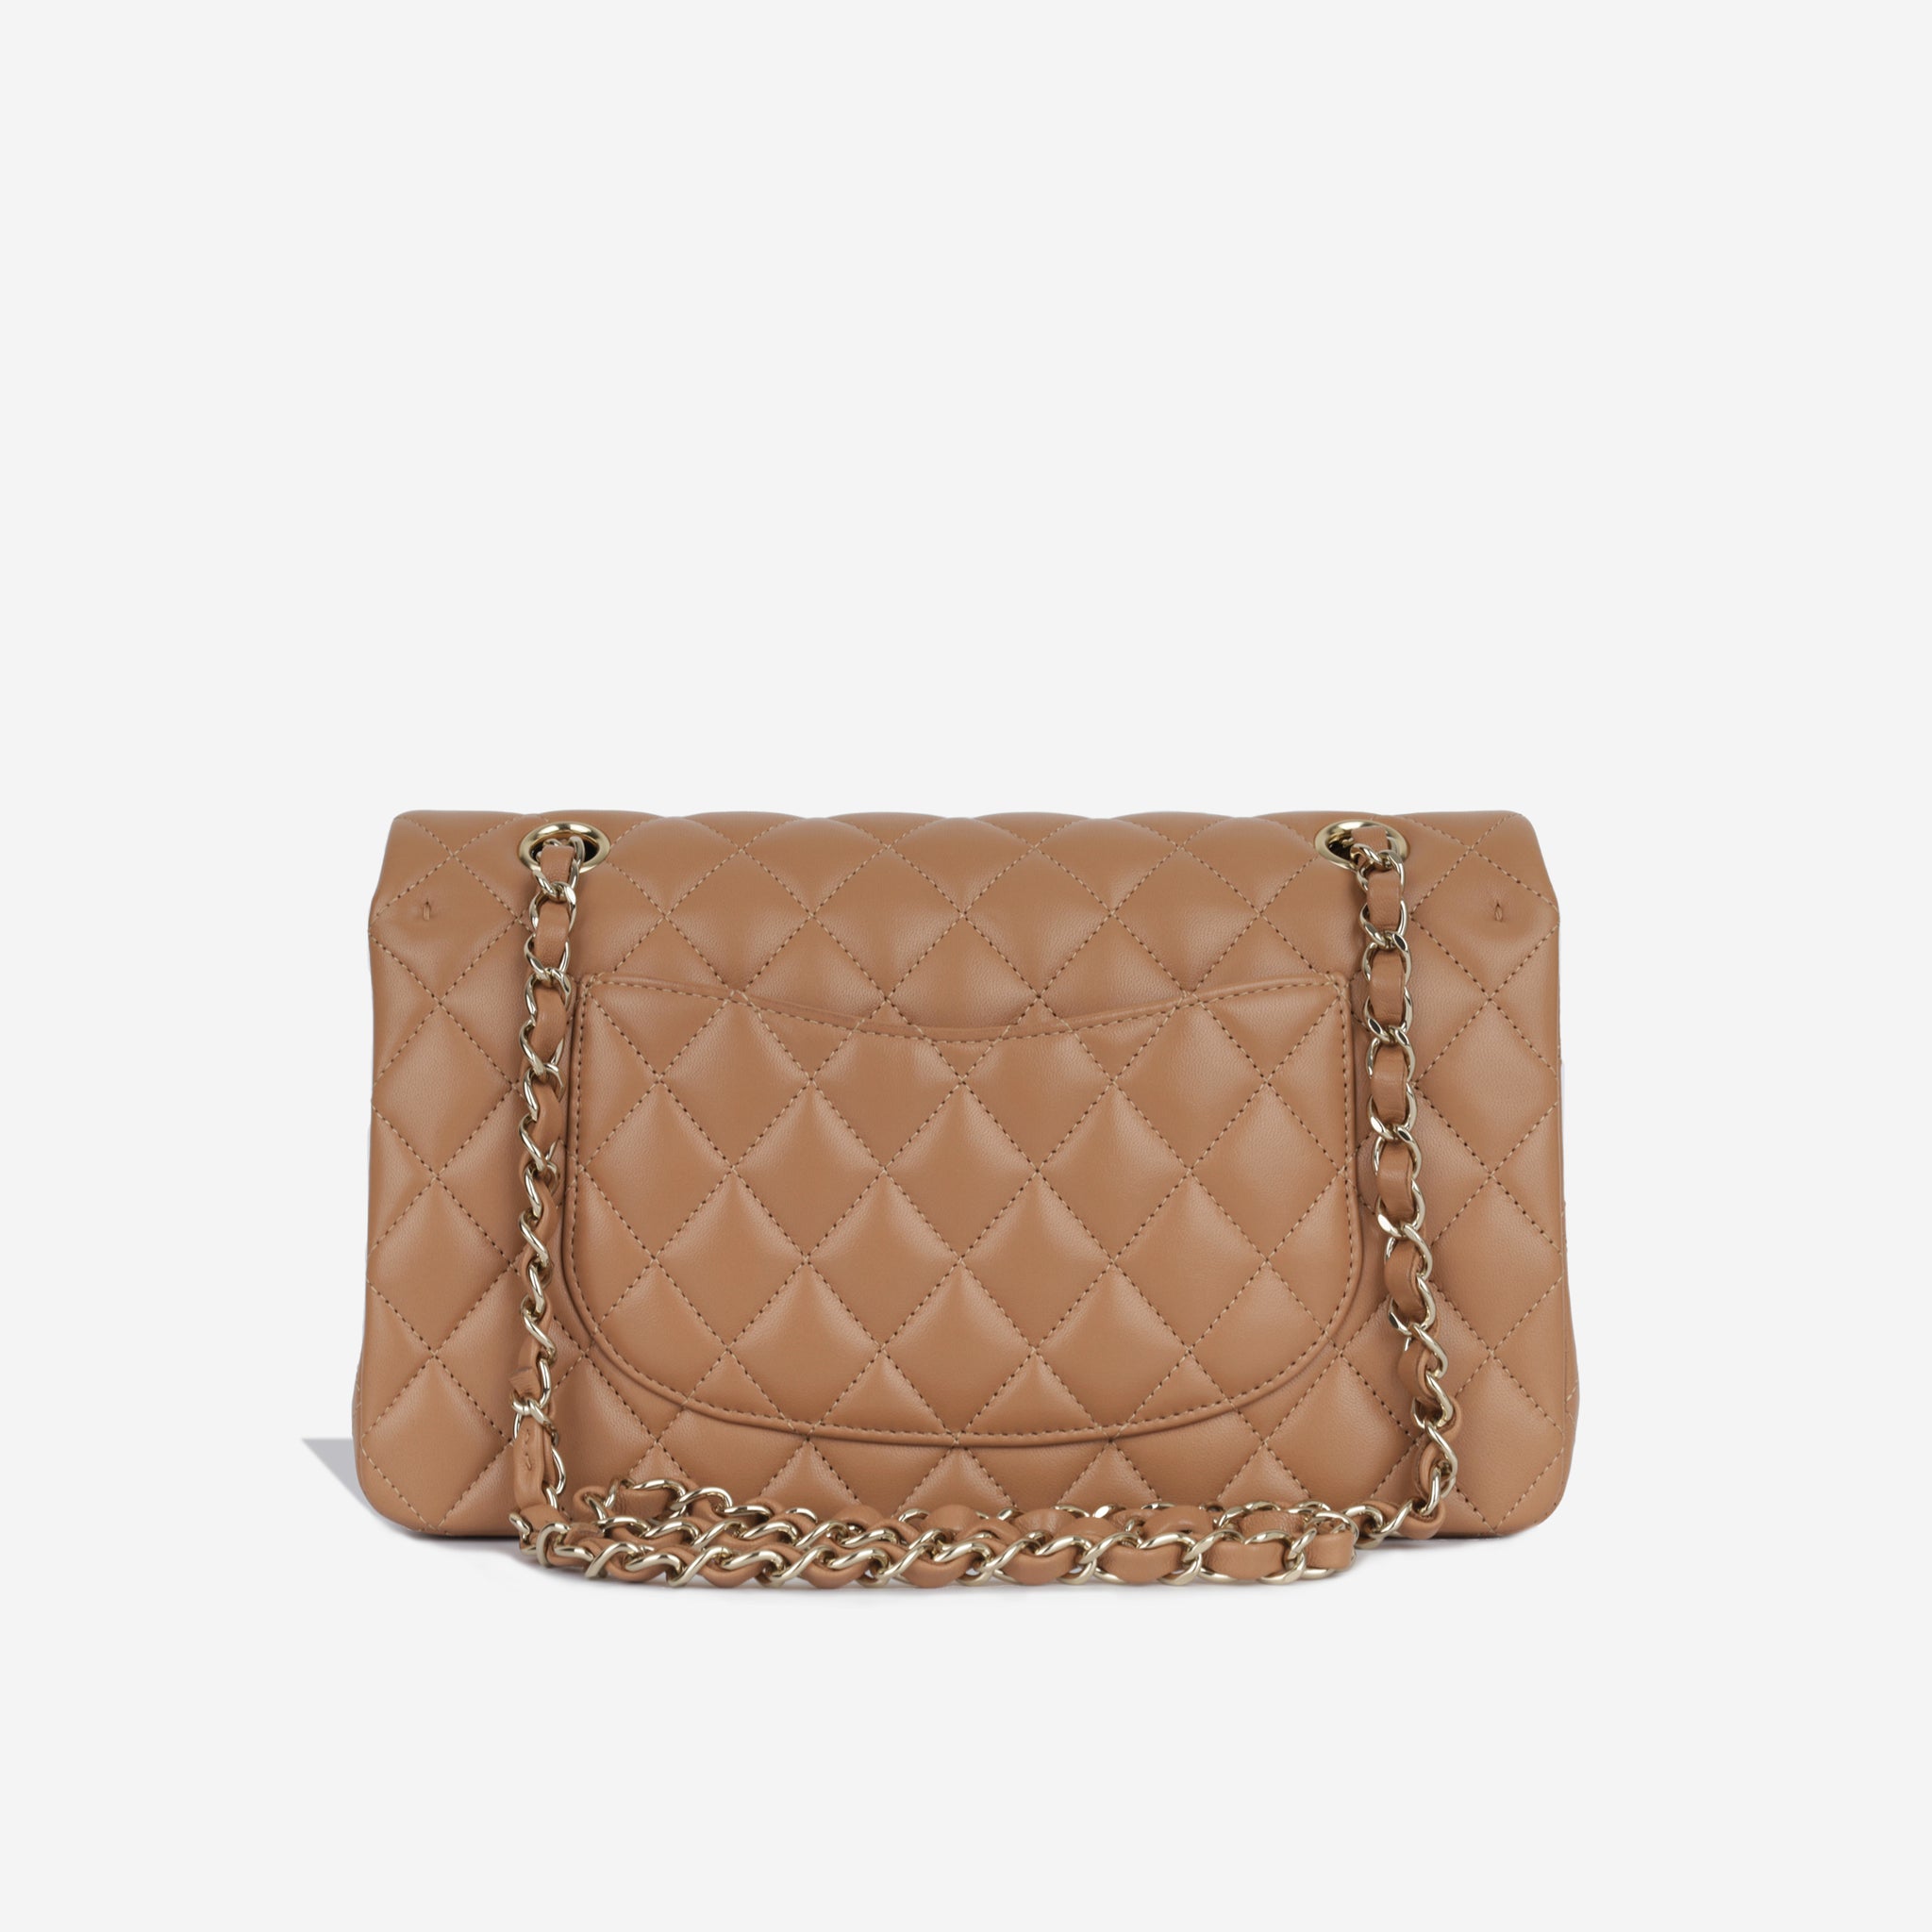 Chanel - Medium Classic Flap Bag - Caramel Lambskin - CGHW - 2021